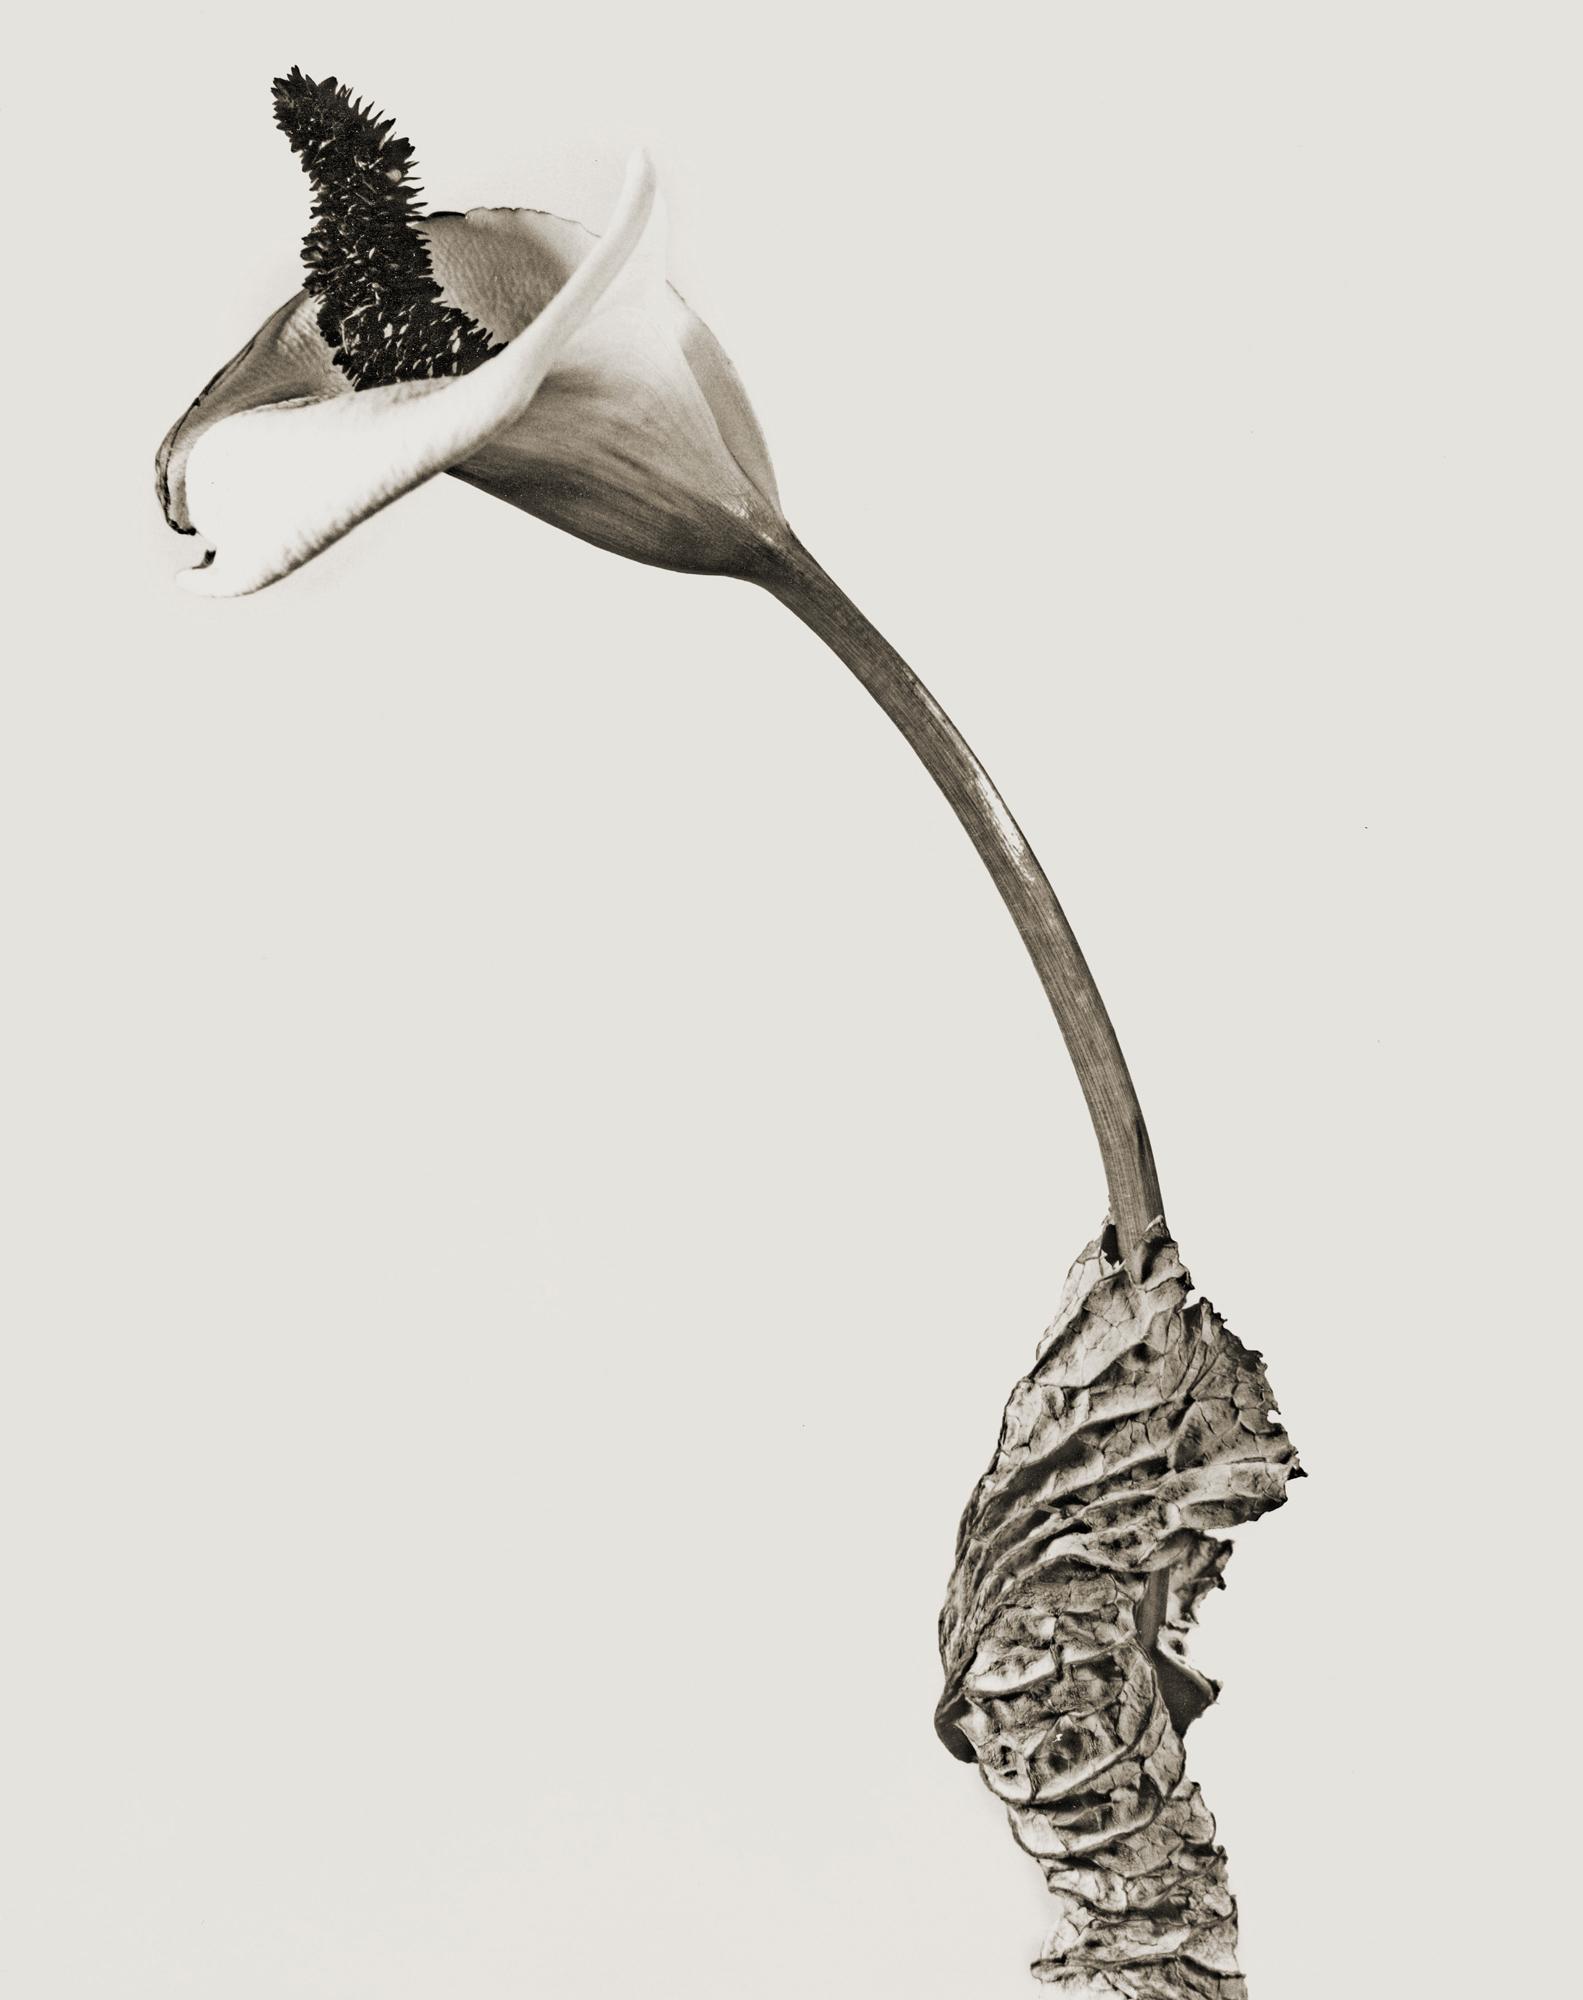 ”Cala Rasca”  (från Herbarium-serien)
© Joan Fontcuberta & Pere Formiguera